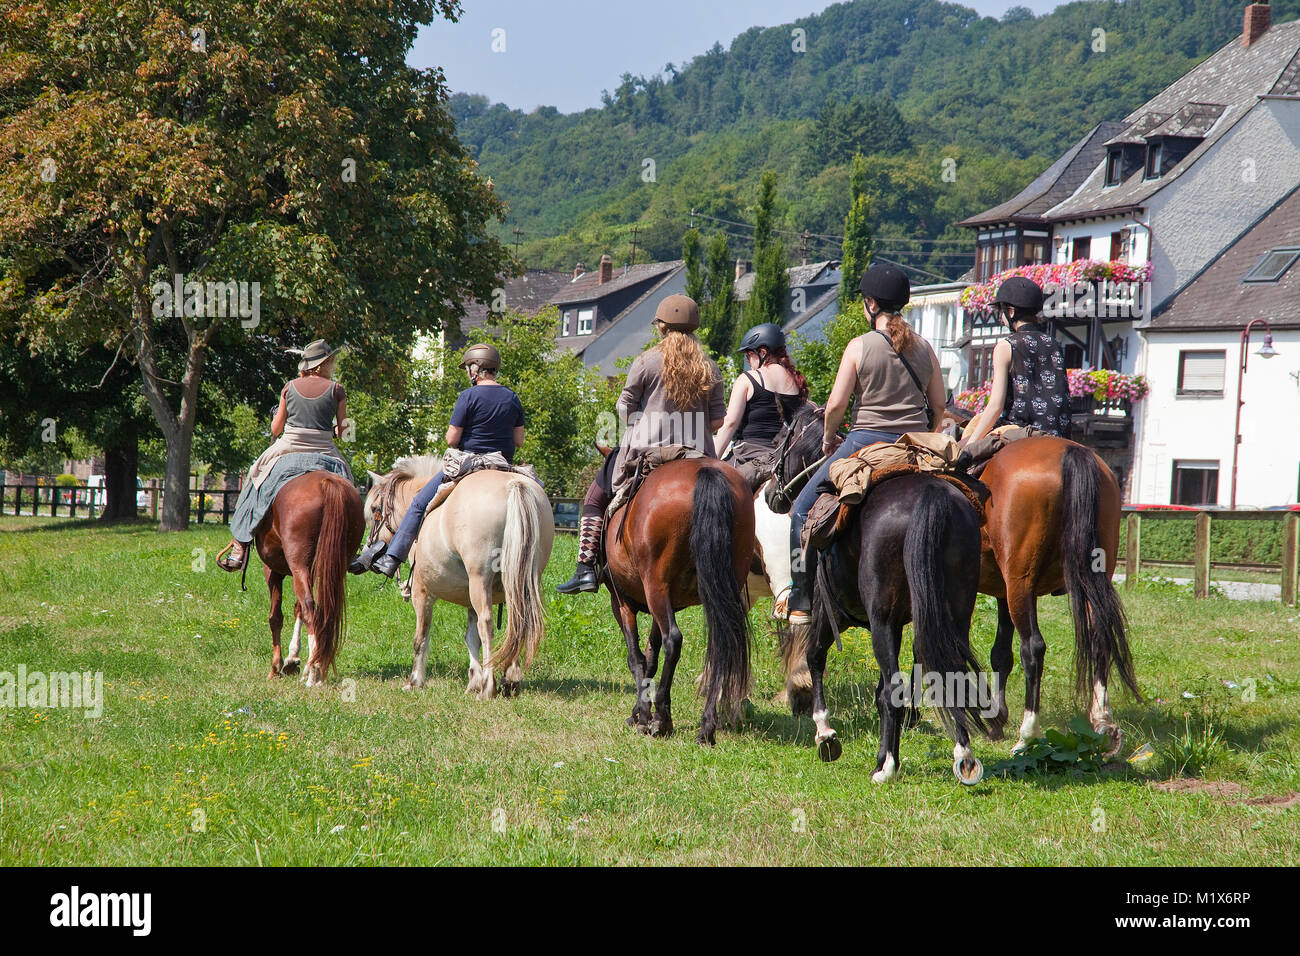 Horseback riding at riverside of Moselle river, Hatzenport, Moselle river, Rhineland-Palatinate, Germany, Europe Stock Photo